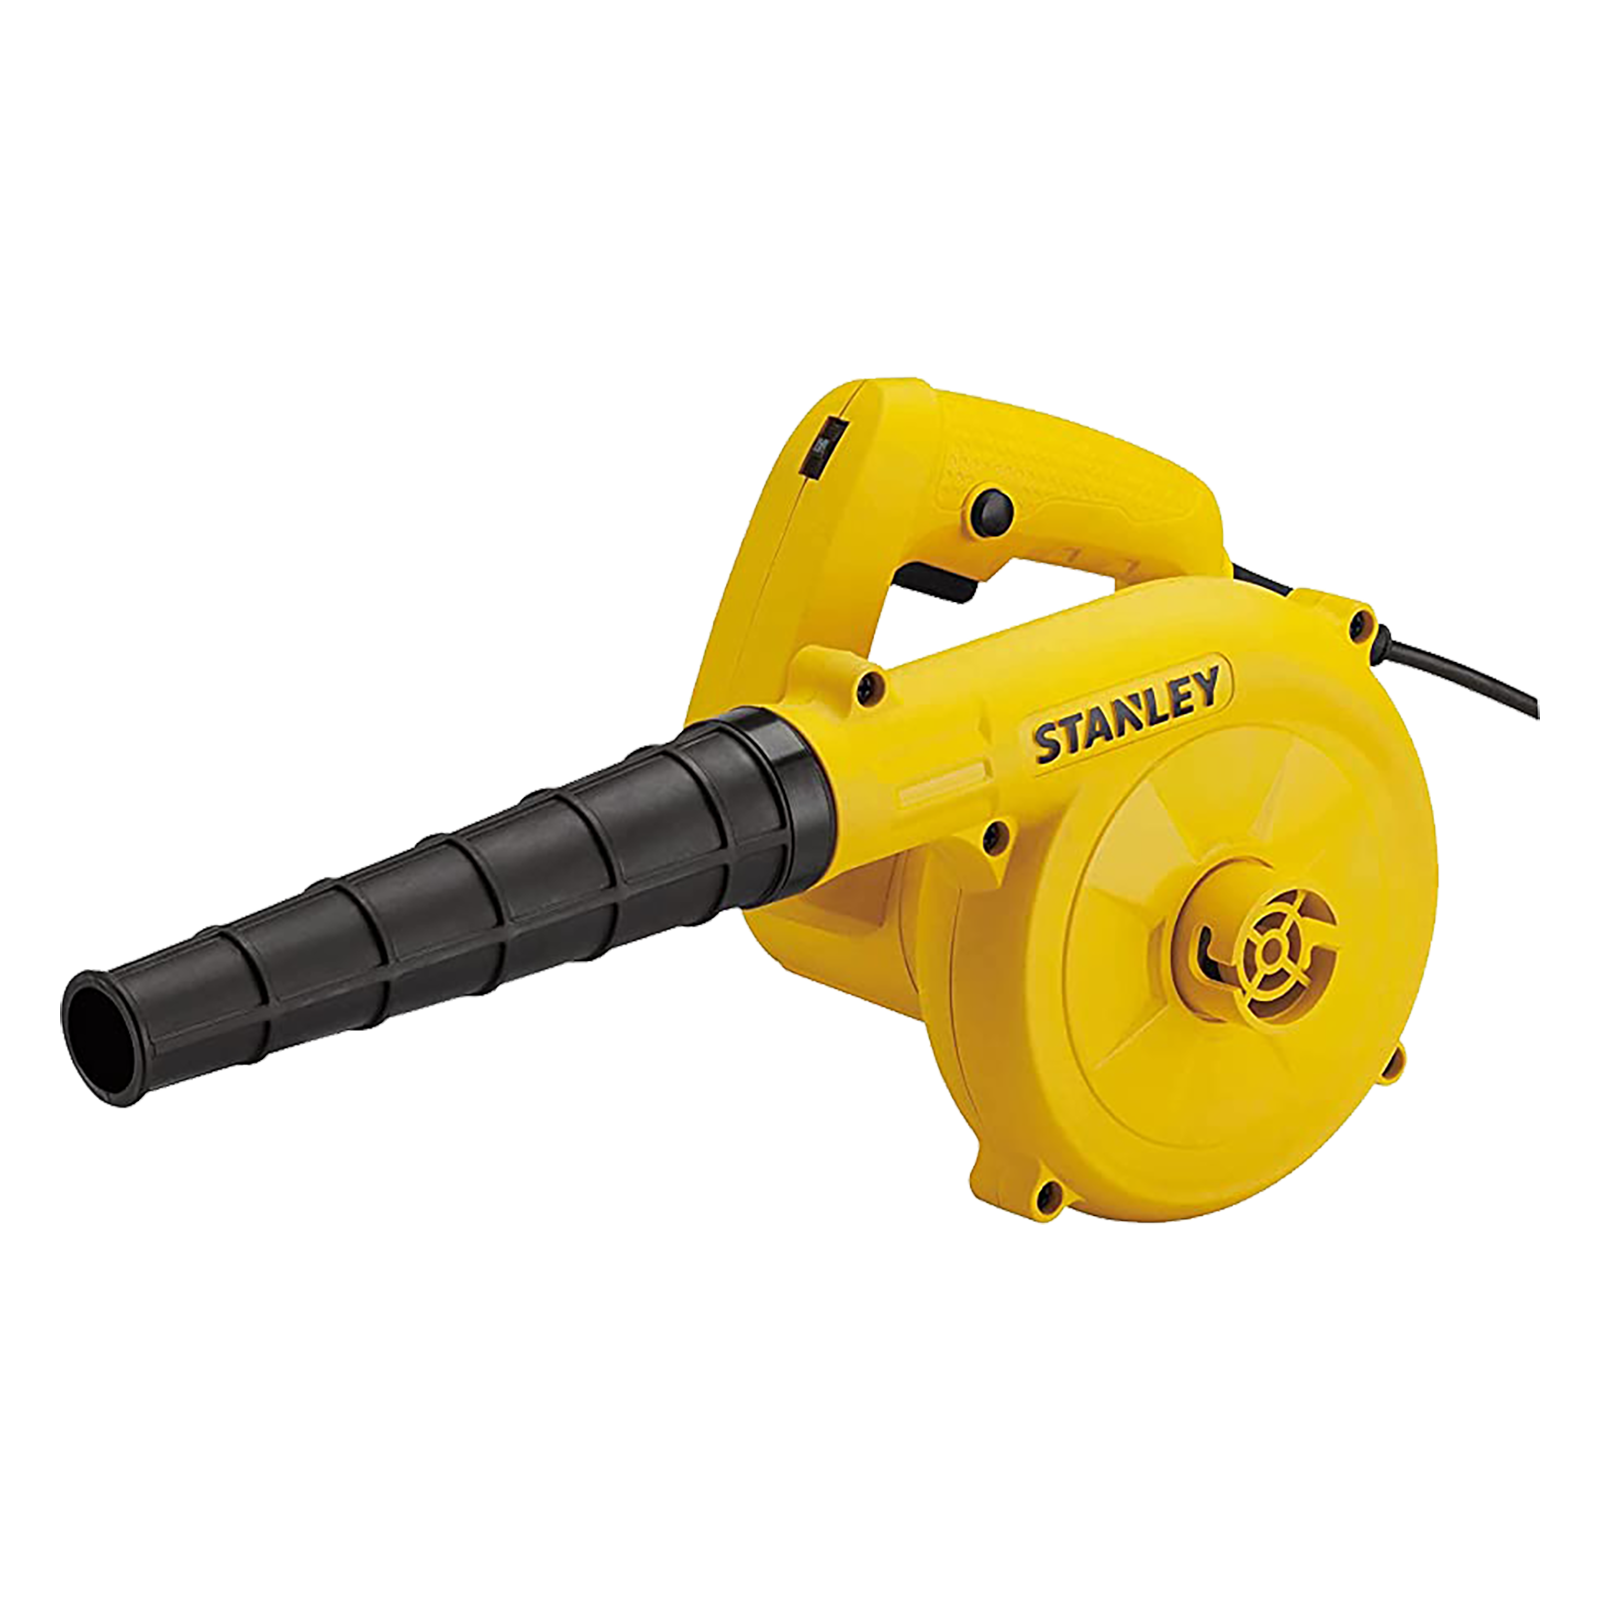 Stanley 600 Watts Speed Blower (Variable Speed, STPT600-IN, Yellow)_1